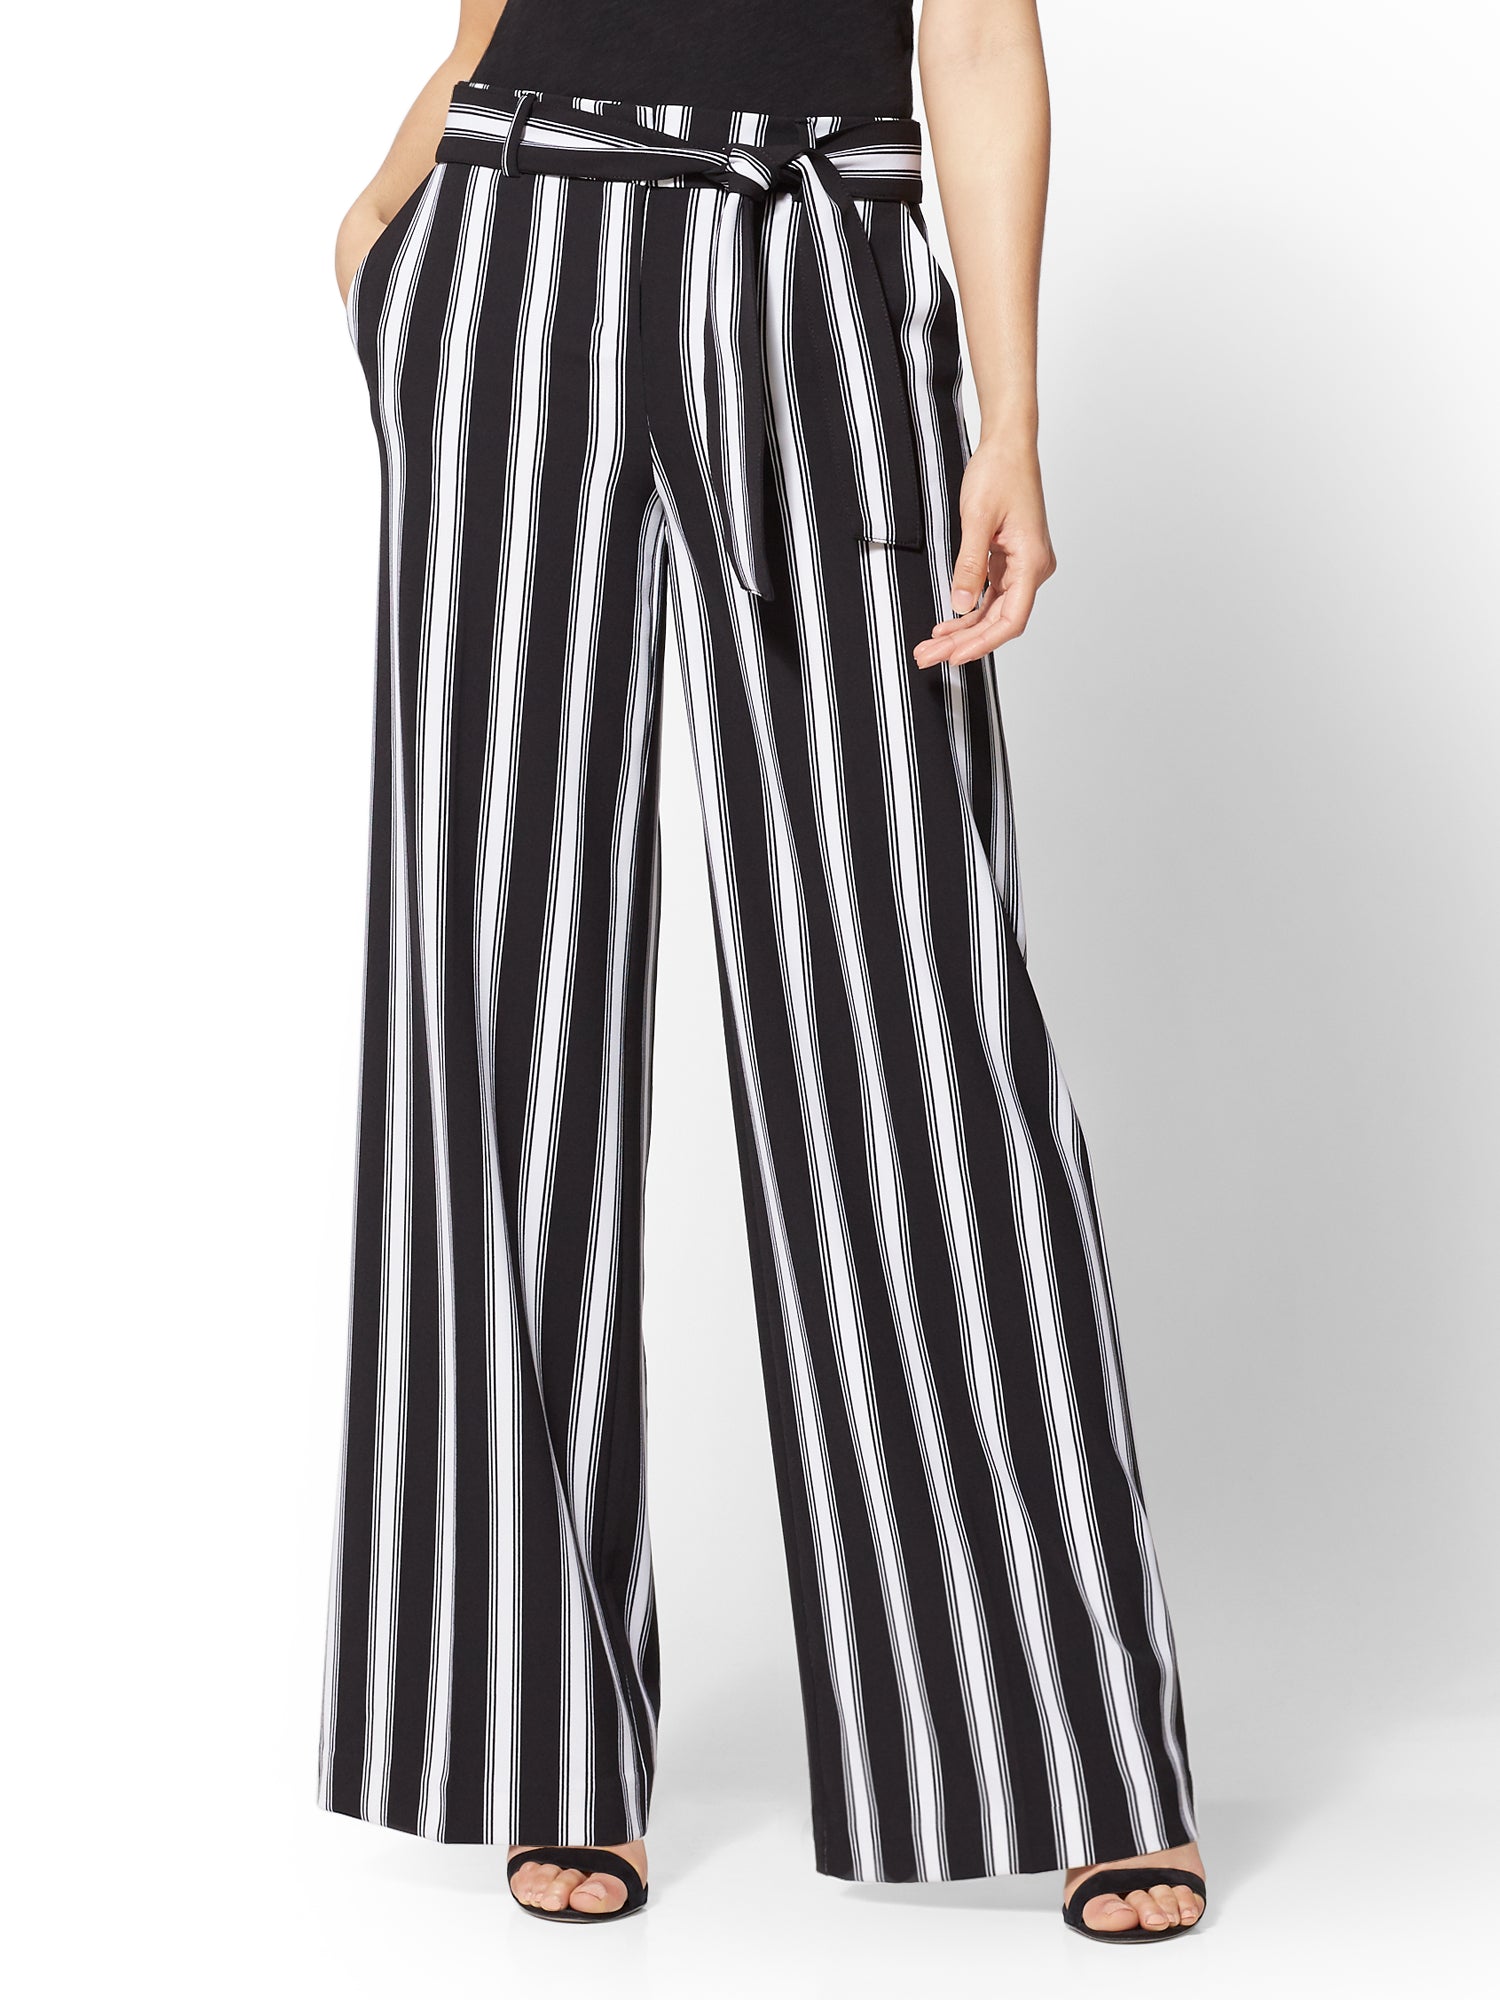 black palazzo pants with white stripes